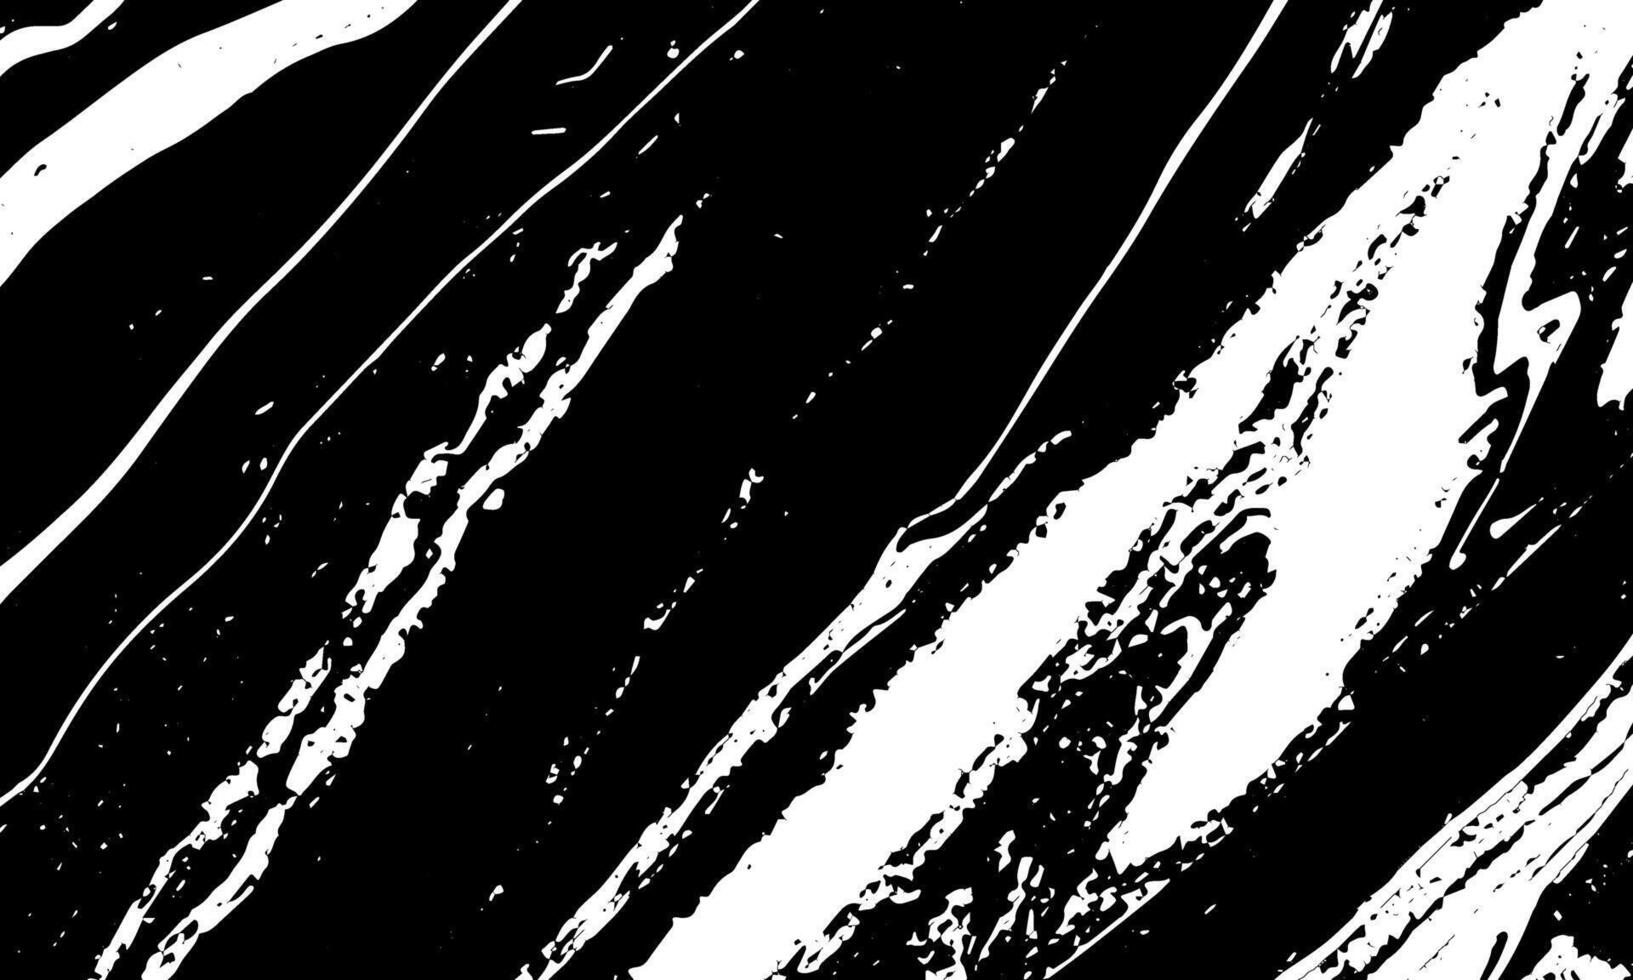 grunge detalhado Preto abstrato textura vetor